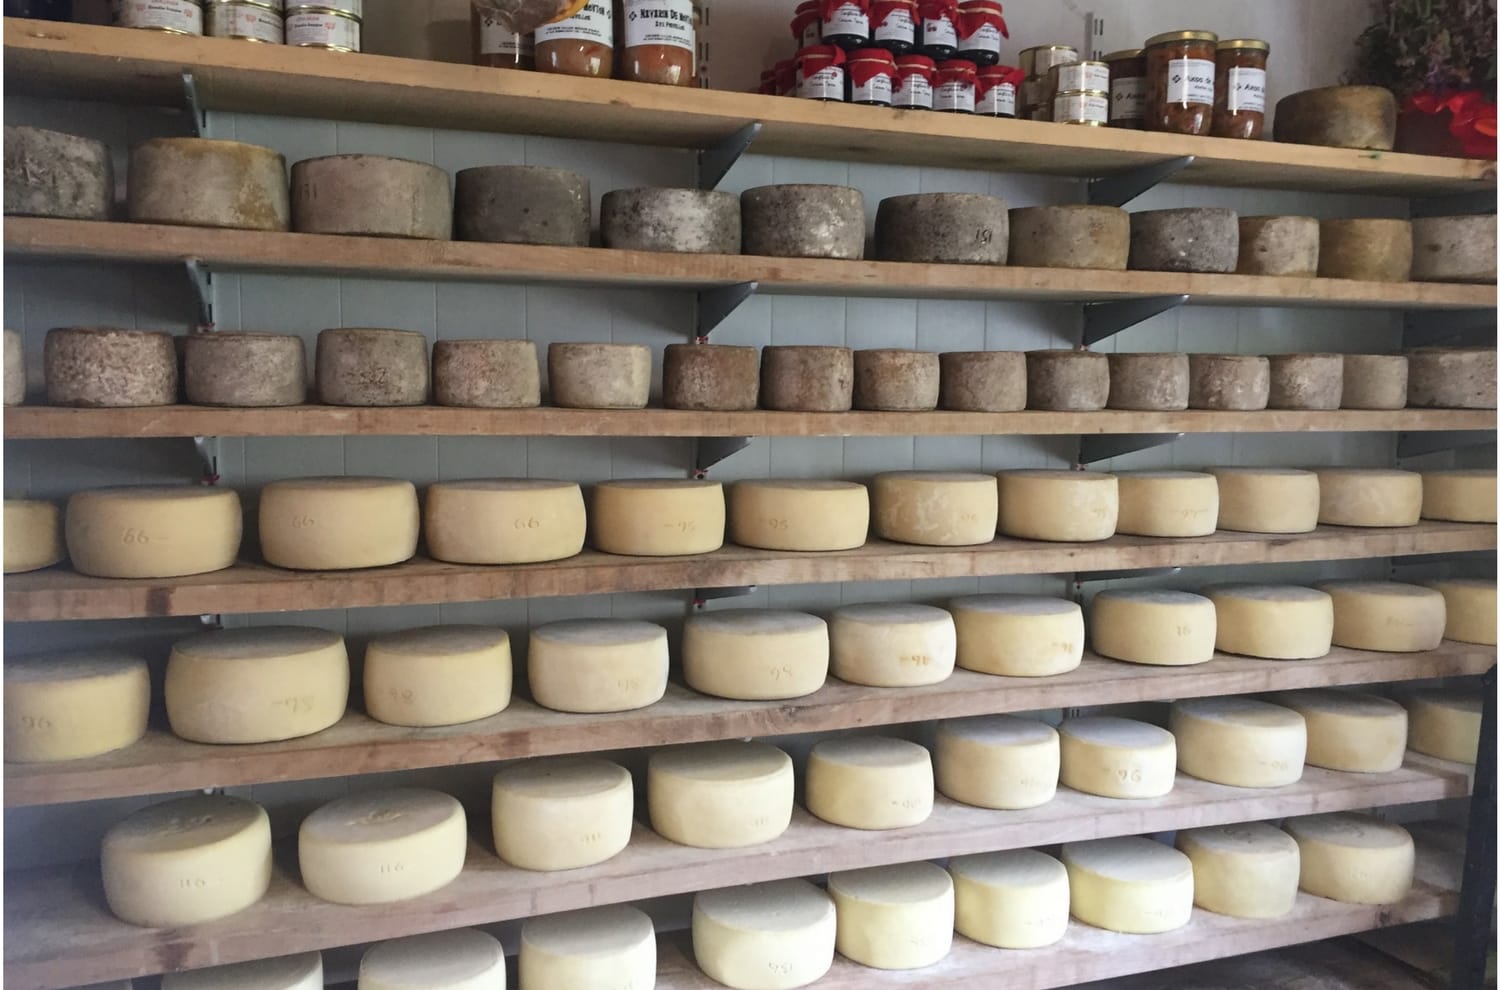 Pyrenees cheese on shelf Will Studd